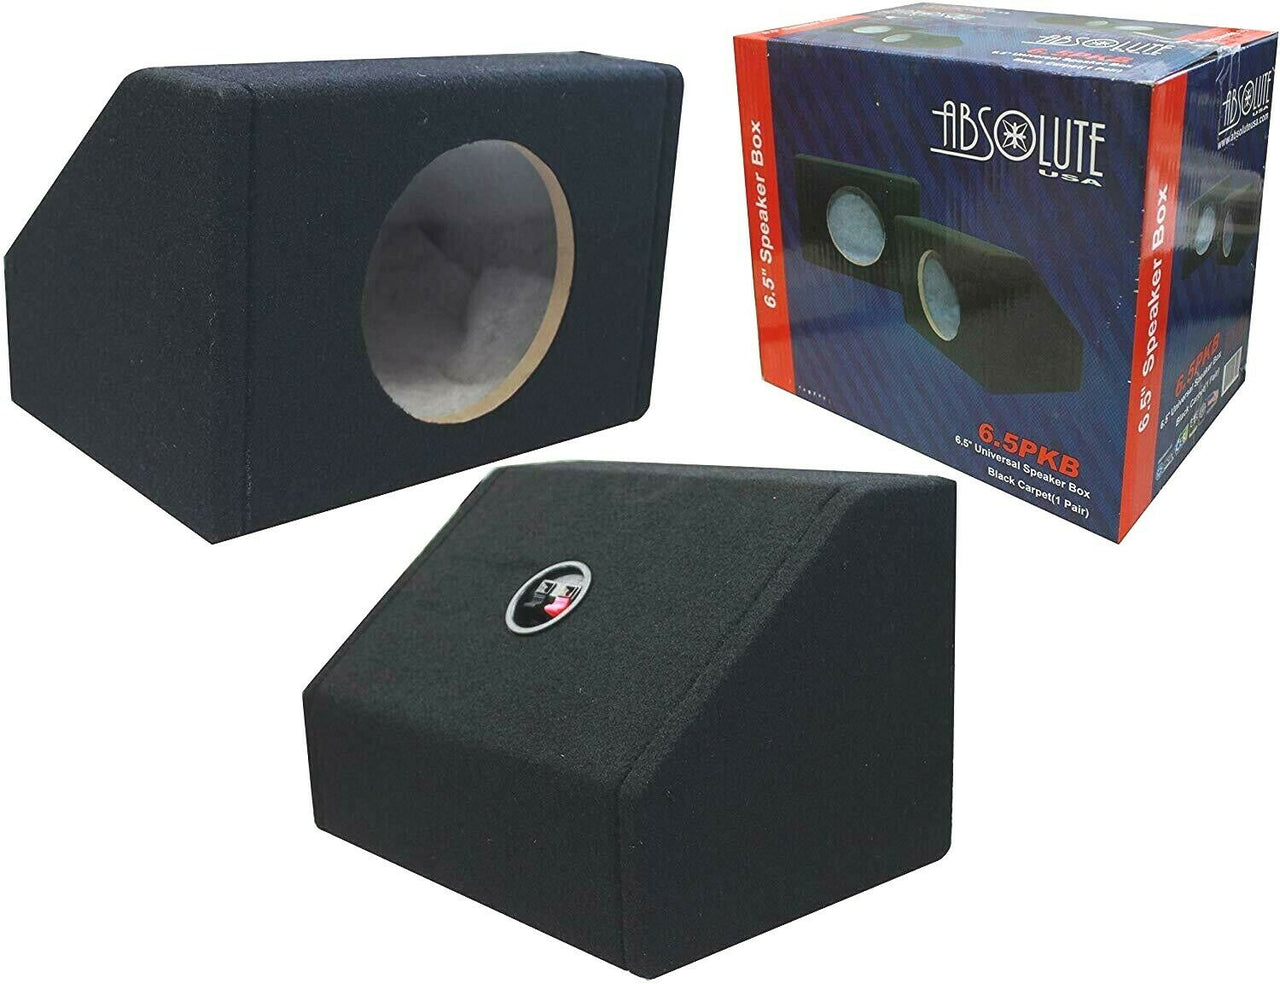 Absolute 6.5PKB 6 1/2" Angled/Wedge Single Speaker Enclosure box pair